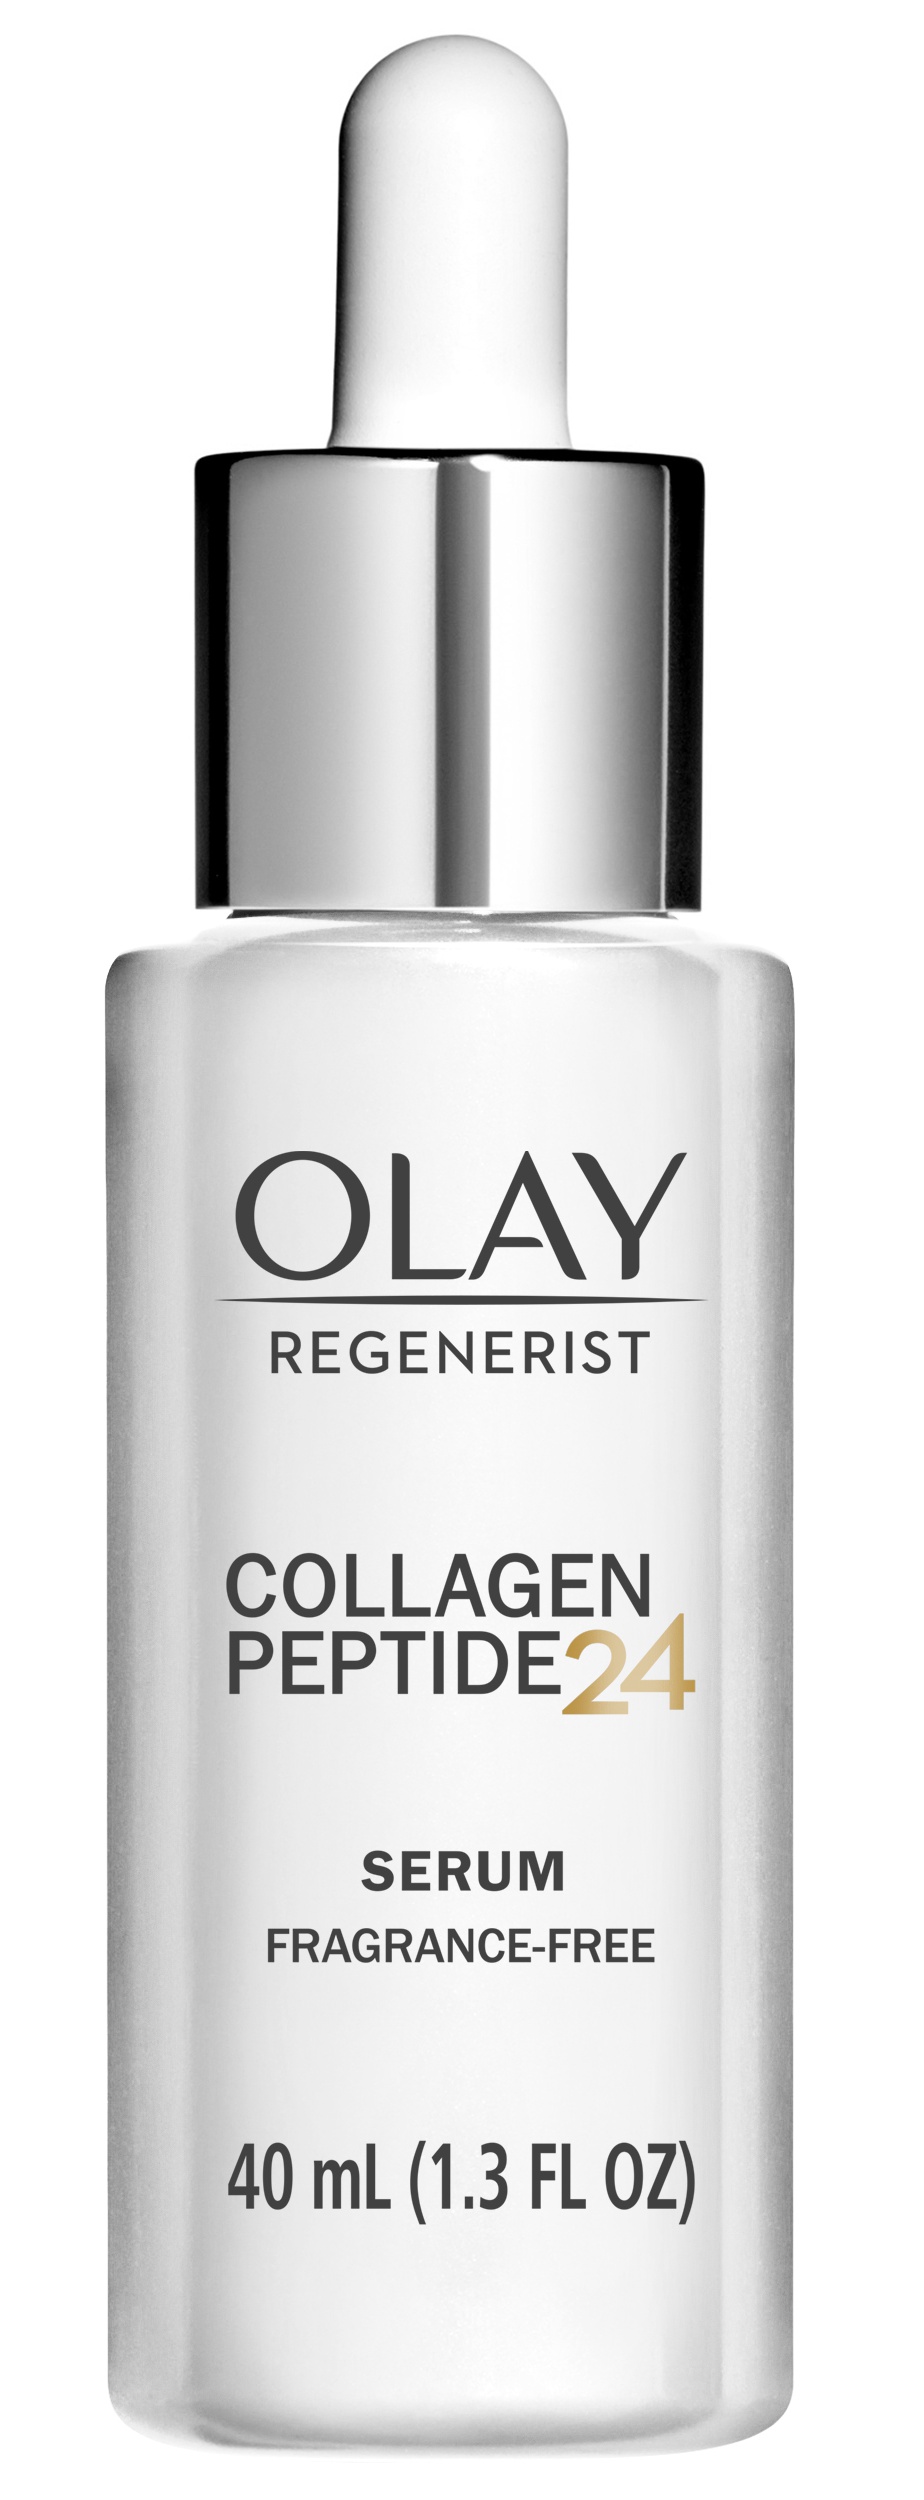 Olay Regenerist Regenerist Collagen Peptide 24 Serum